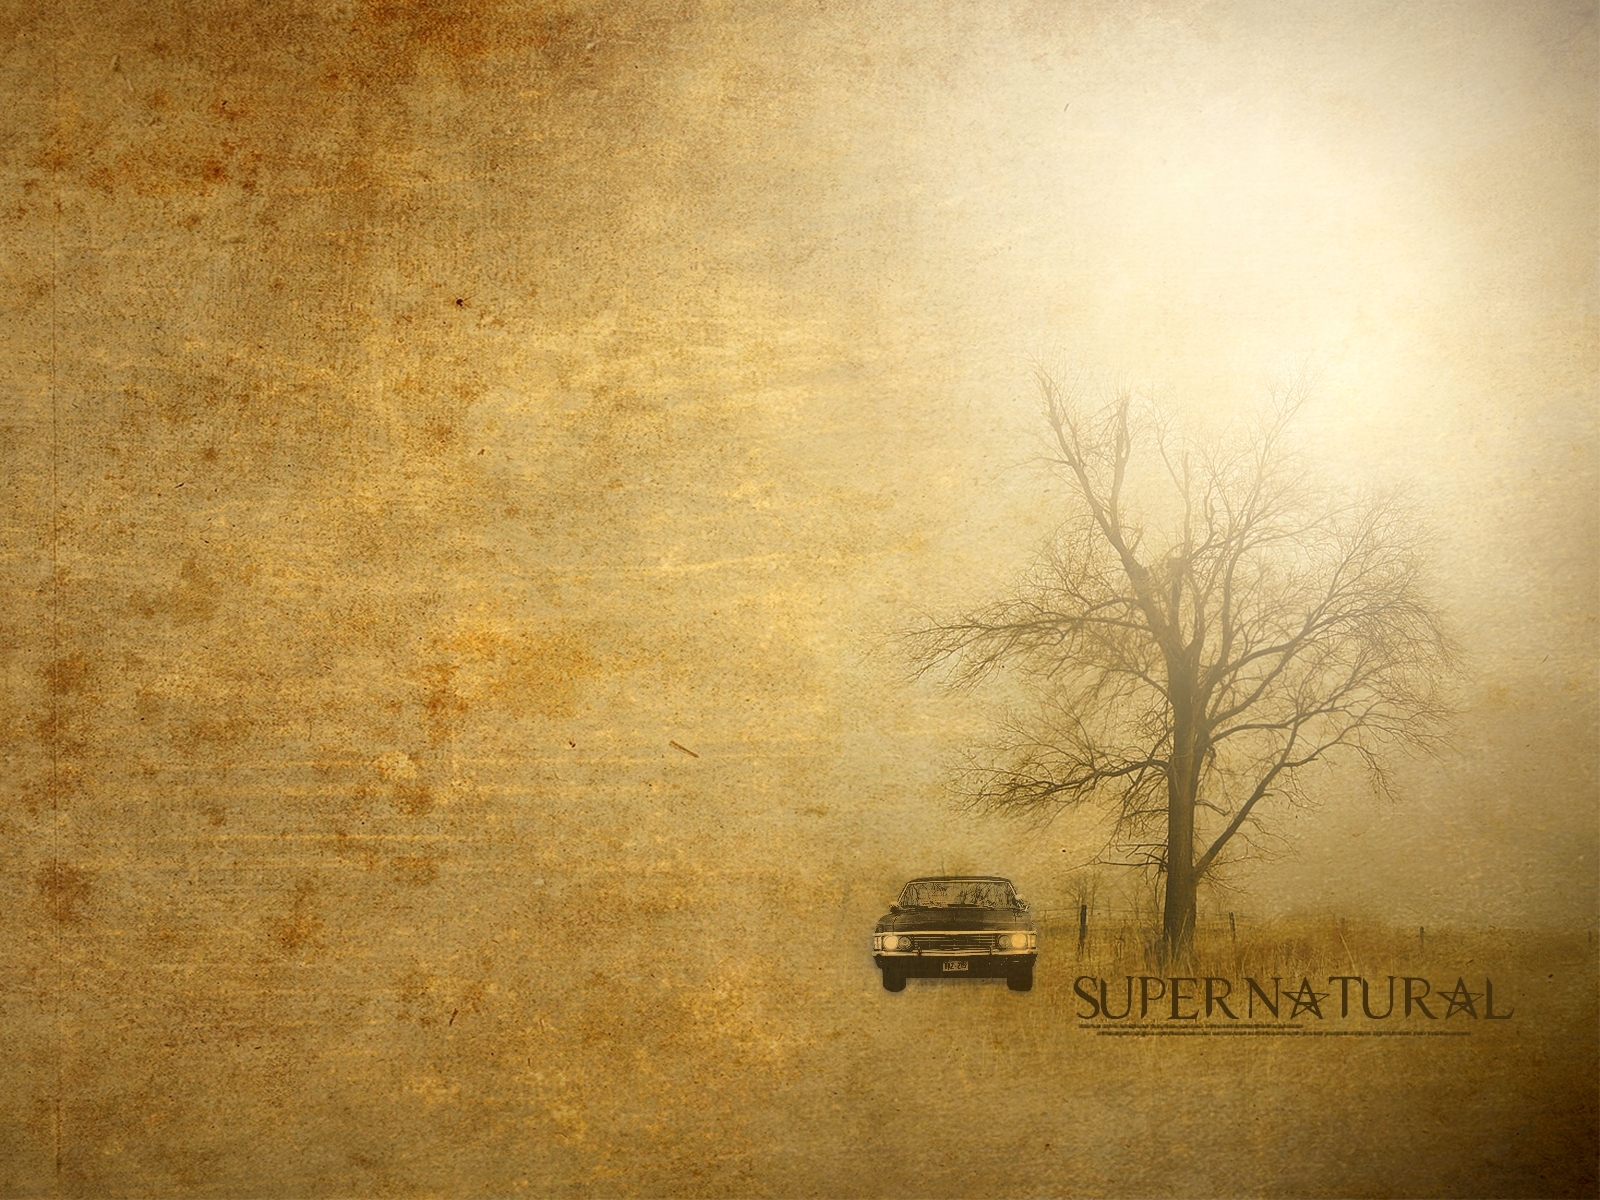 Supernatural Image Impala HD Wallpaper And Background Photos